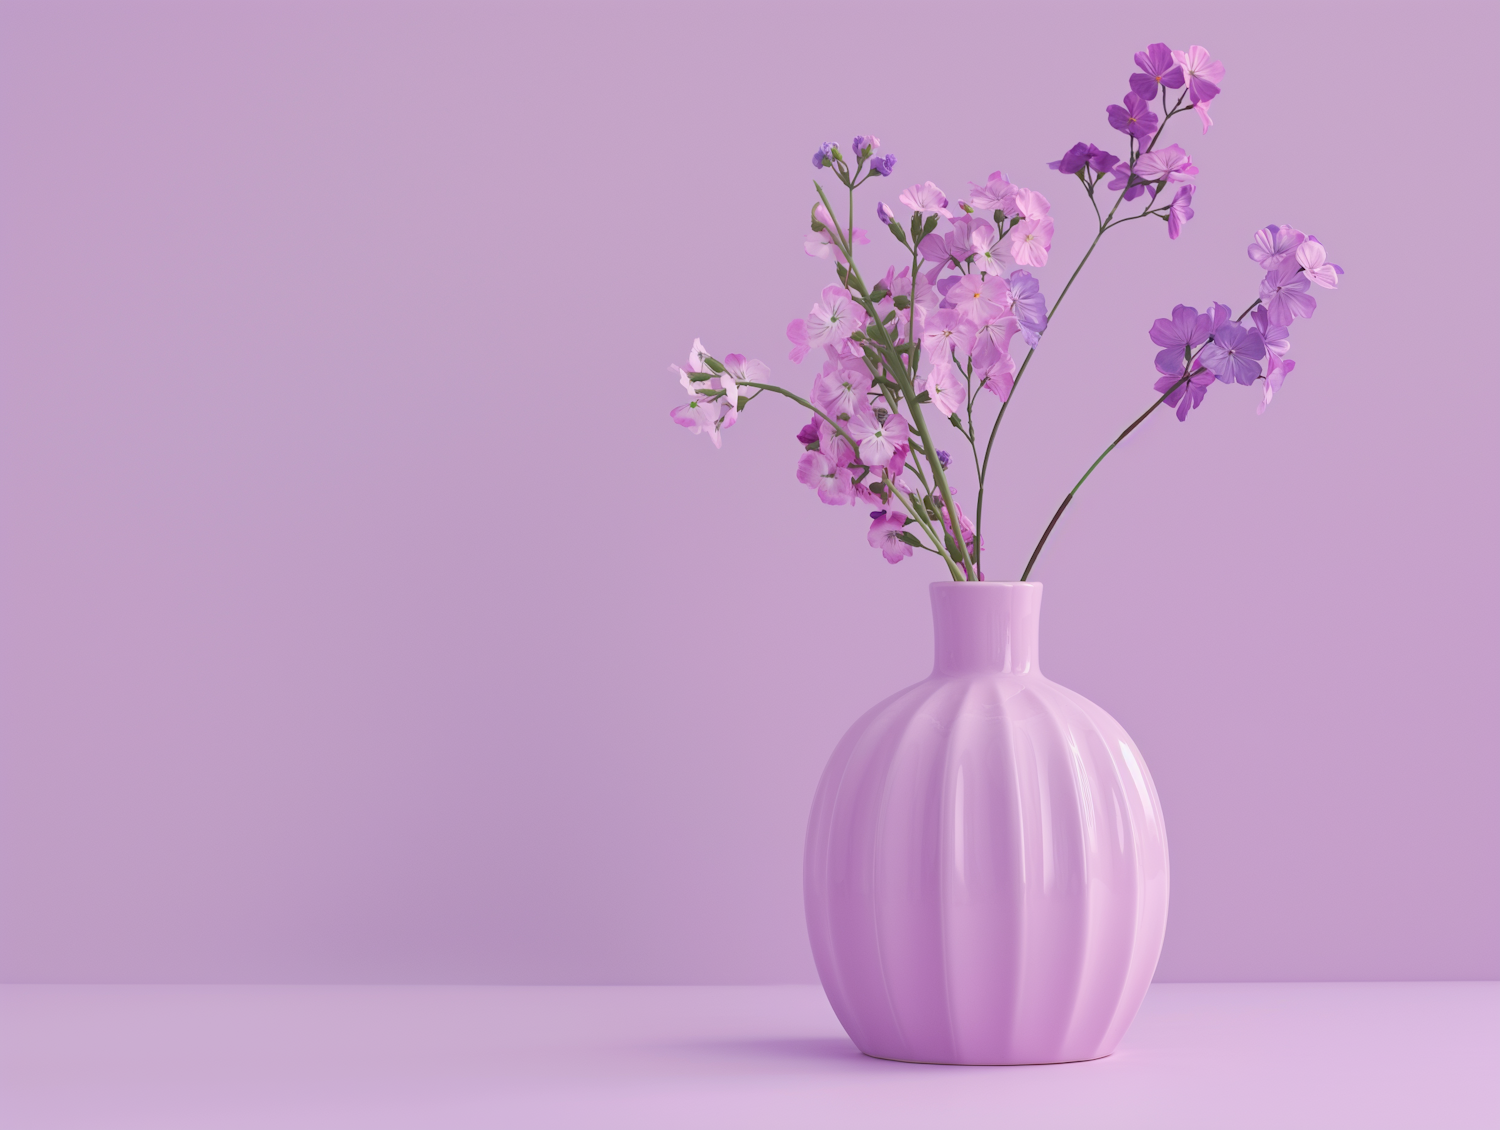 Pastel Pink Vase with Purple Flowers